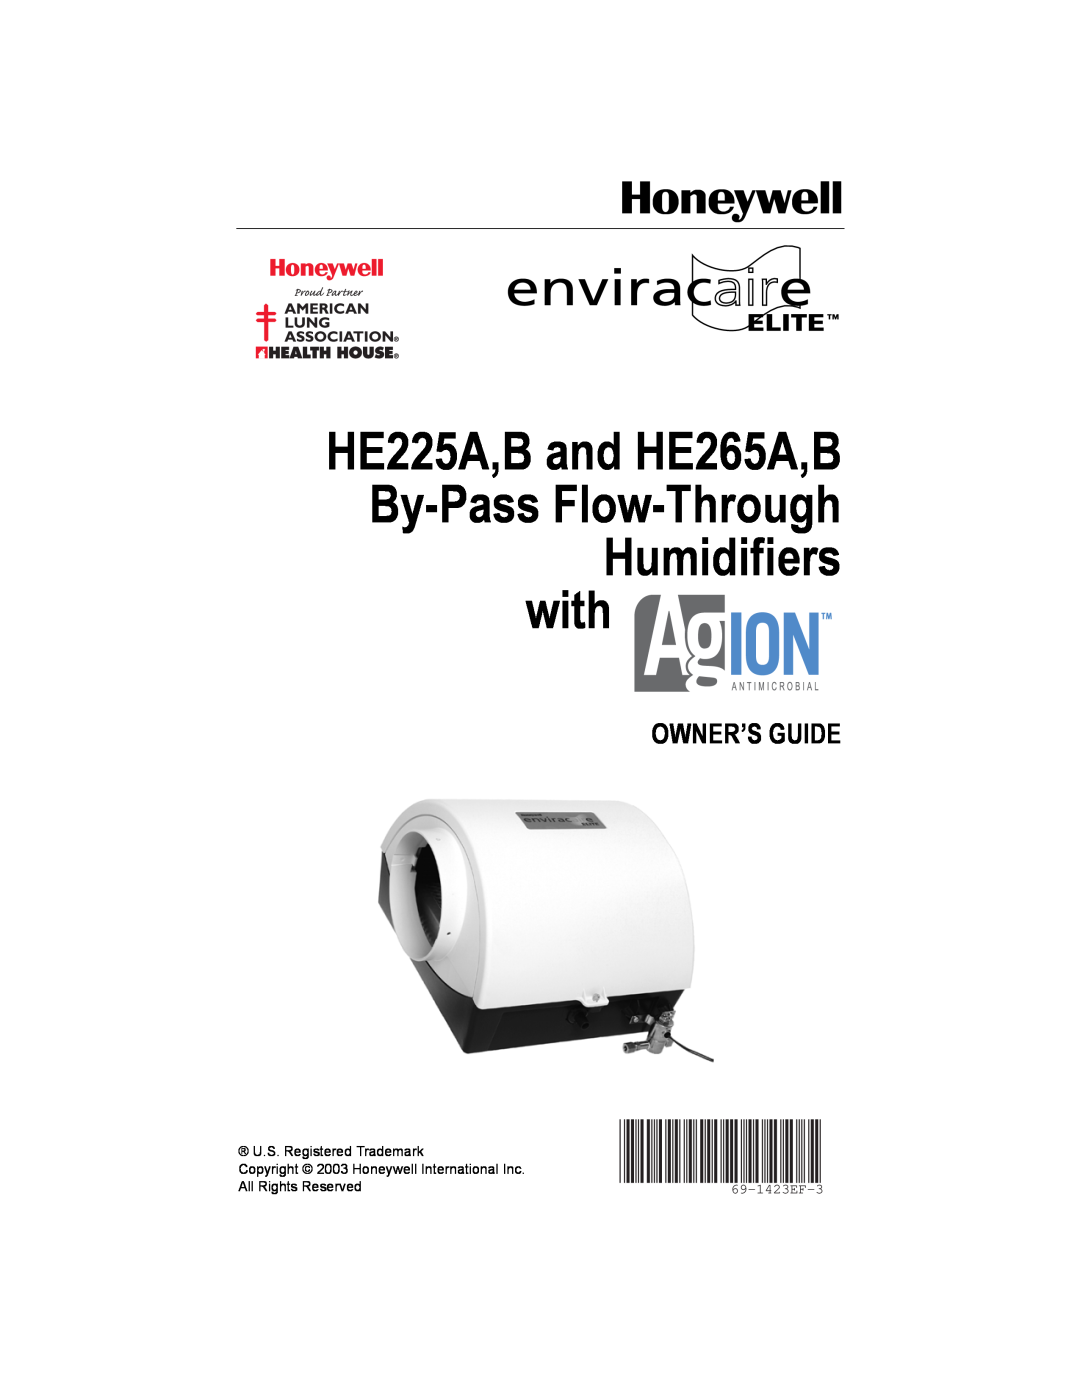 Honeywell HE265A manual Owner’S Guide, U.S. Registered Trademark, Copyright 2003 Honeywell International Inc, 69-1423EF-3 